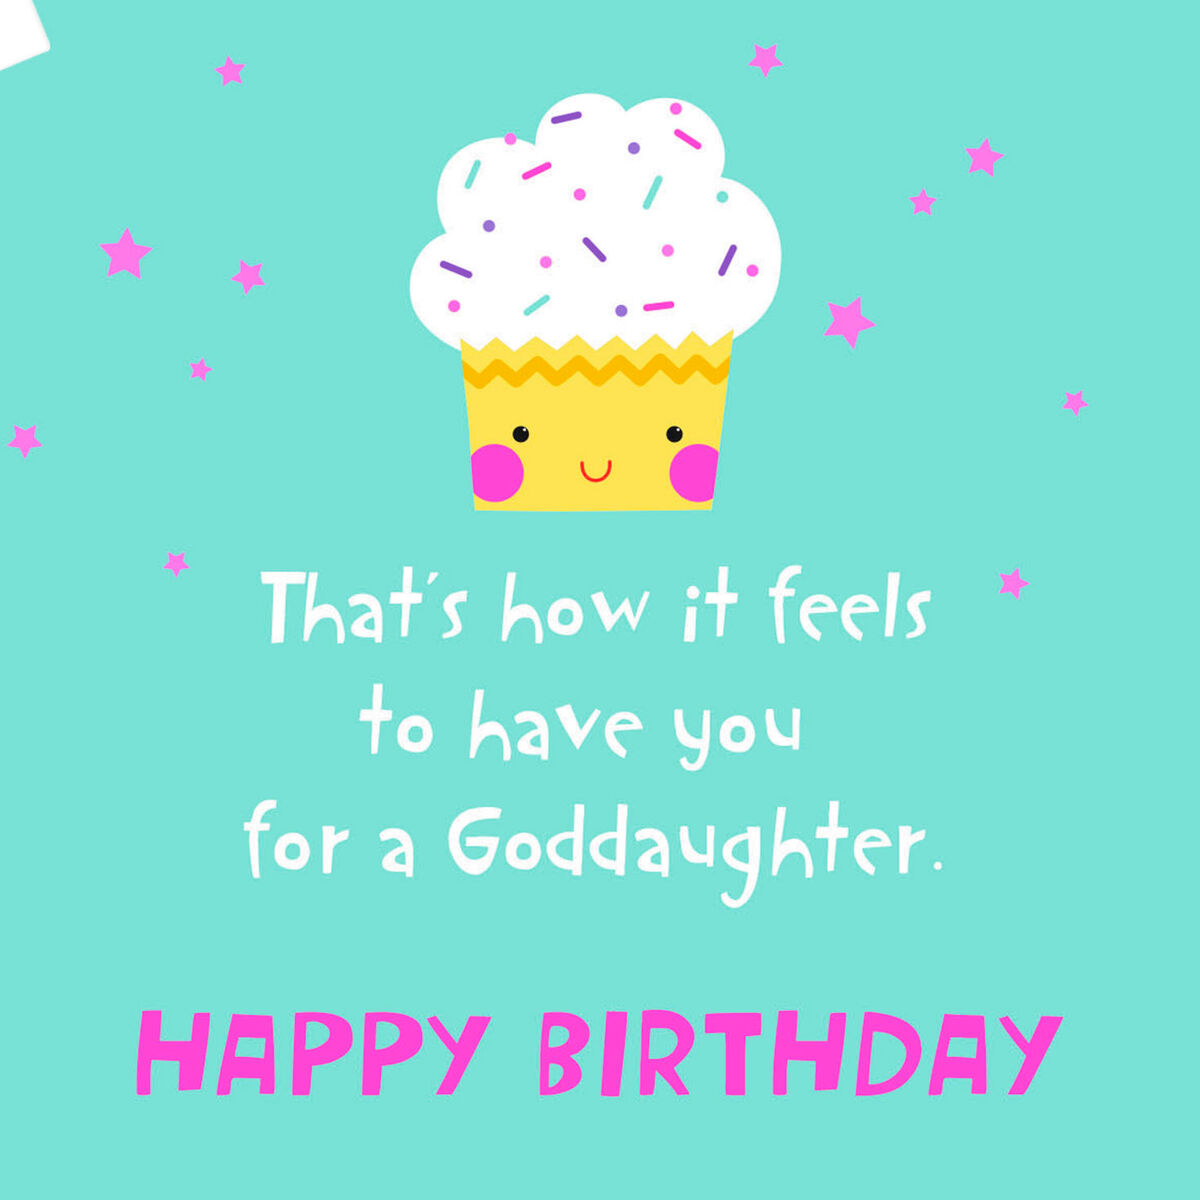 Smiling Cupcake Birthday Card for Goddaughter - Greeting Cards - Hallmark